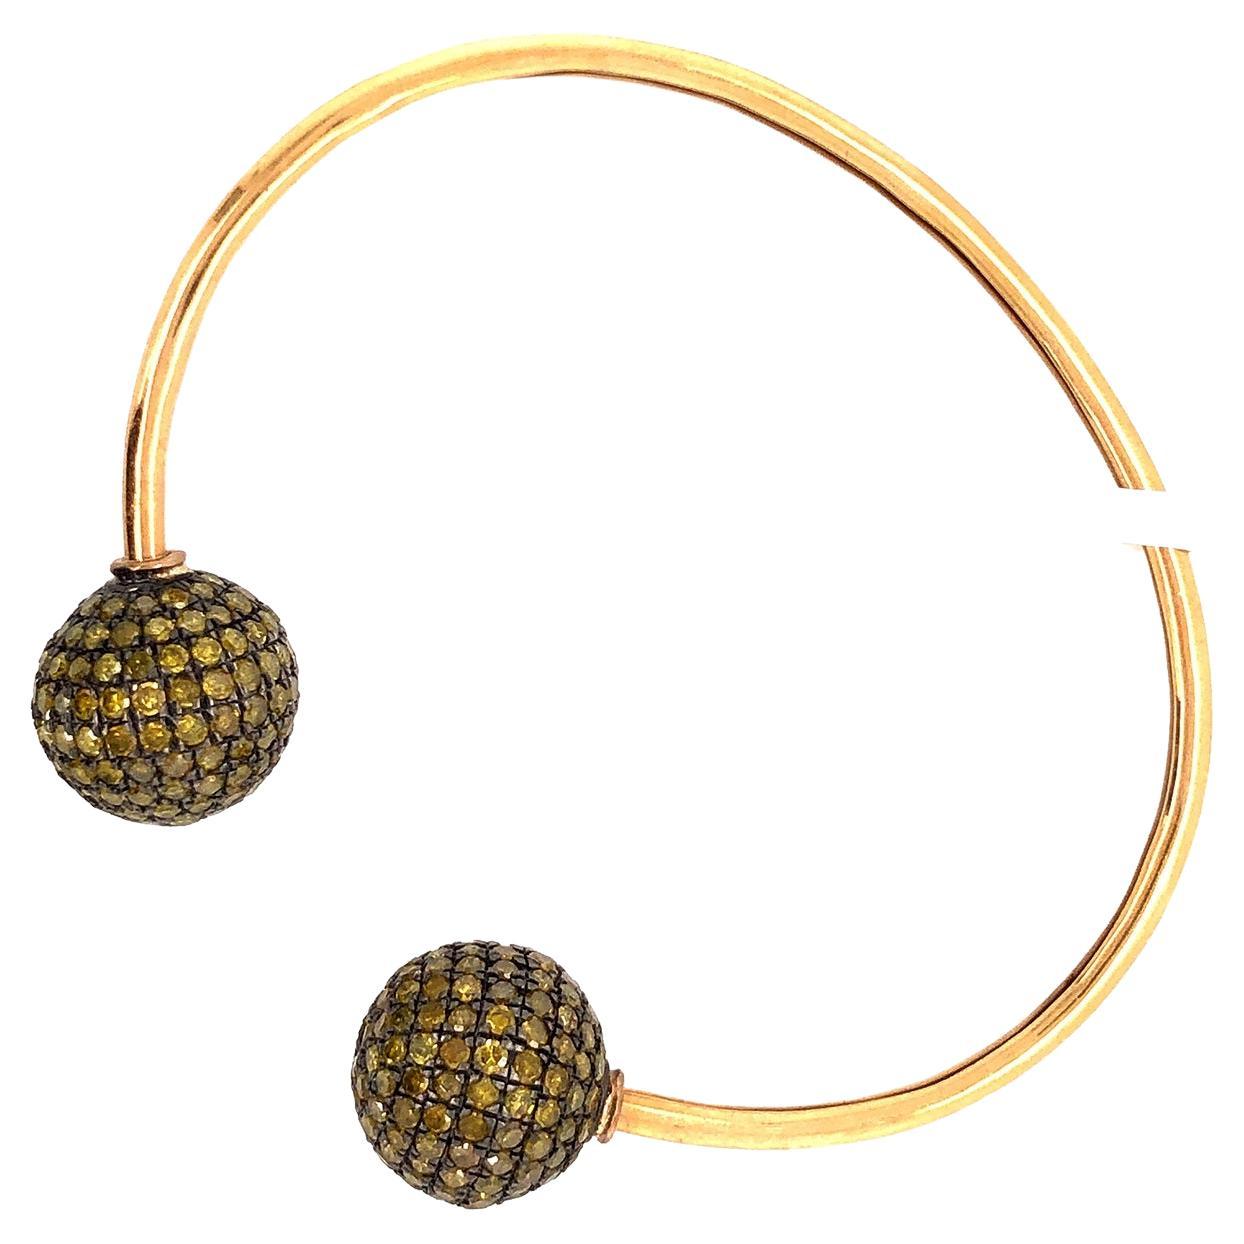 Yellow Pave Diamond Ball Flexible Bangle Made in 18k Gold